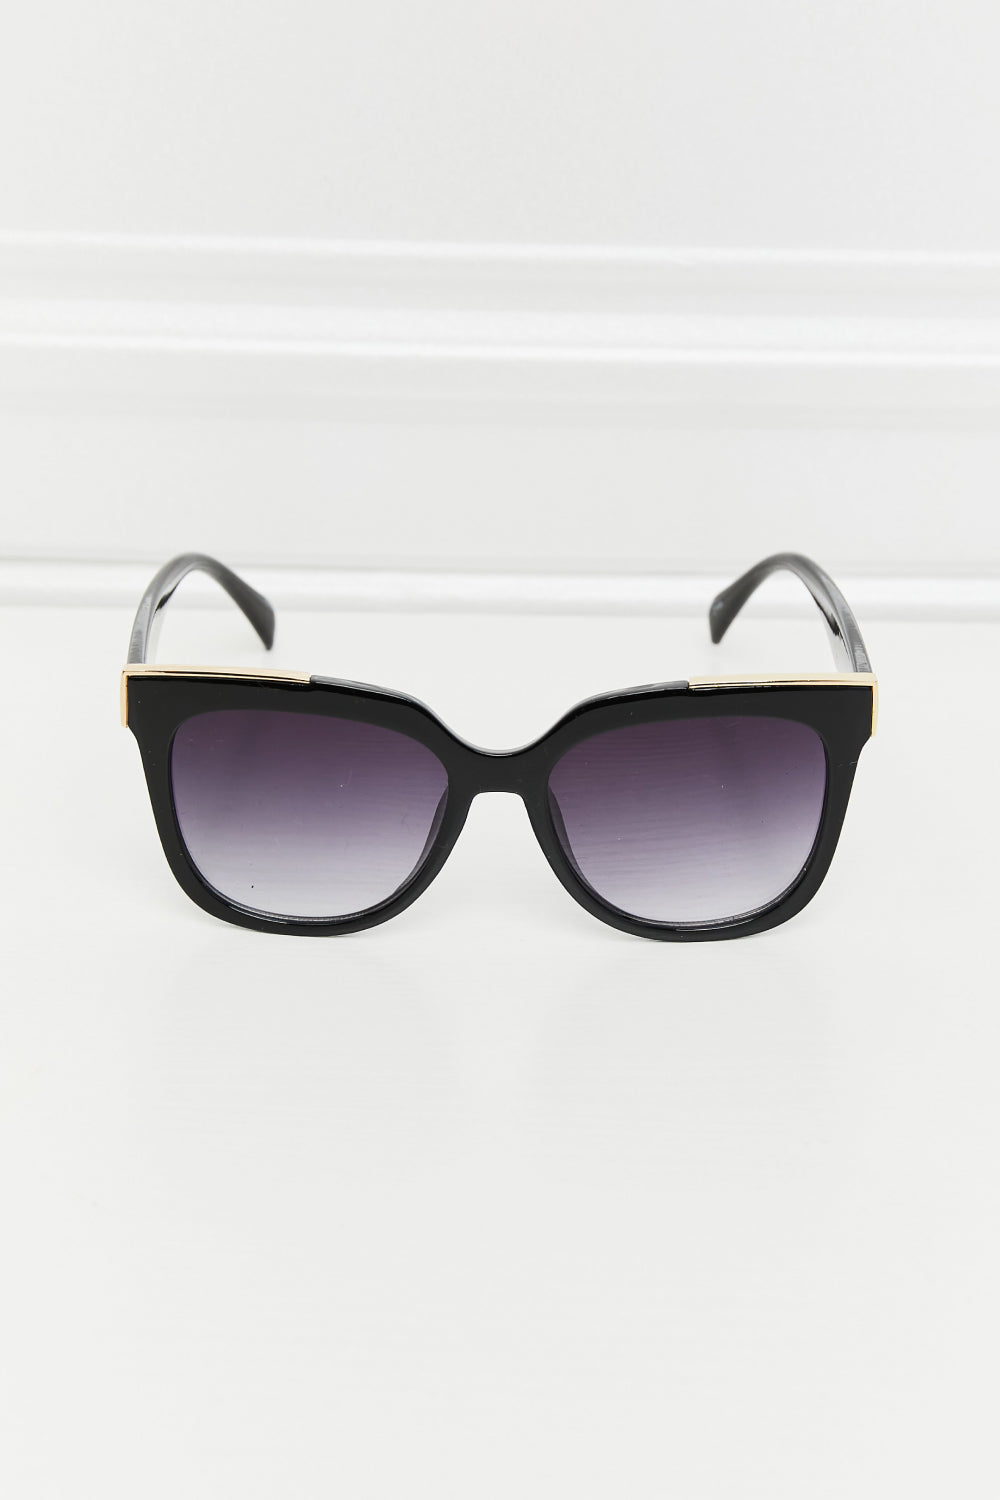 Acetate Lens Full Rim Sunglasses Black One Size Sunglasses by Vim&Vigor | Vim&Vigor Boutique